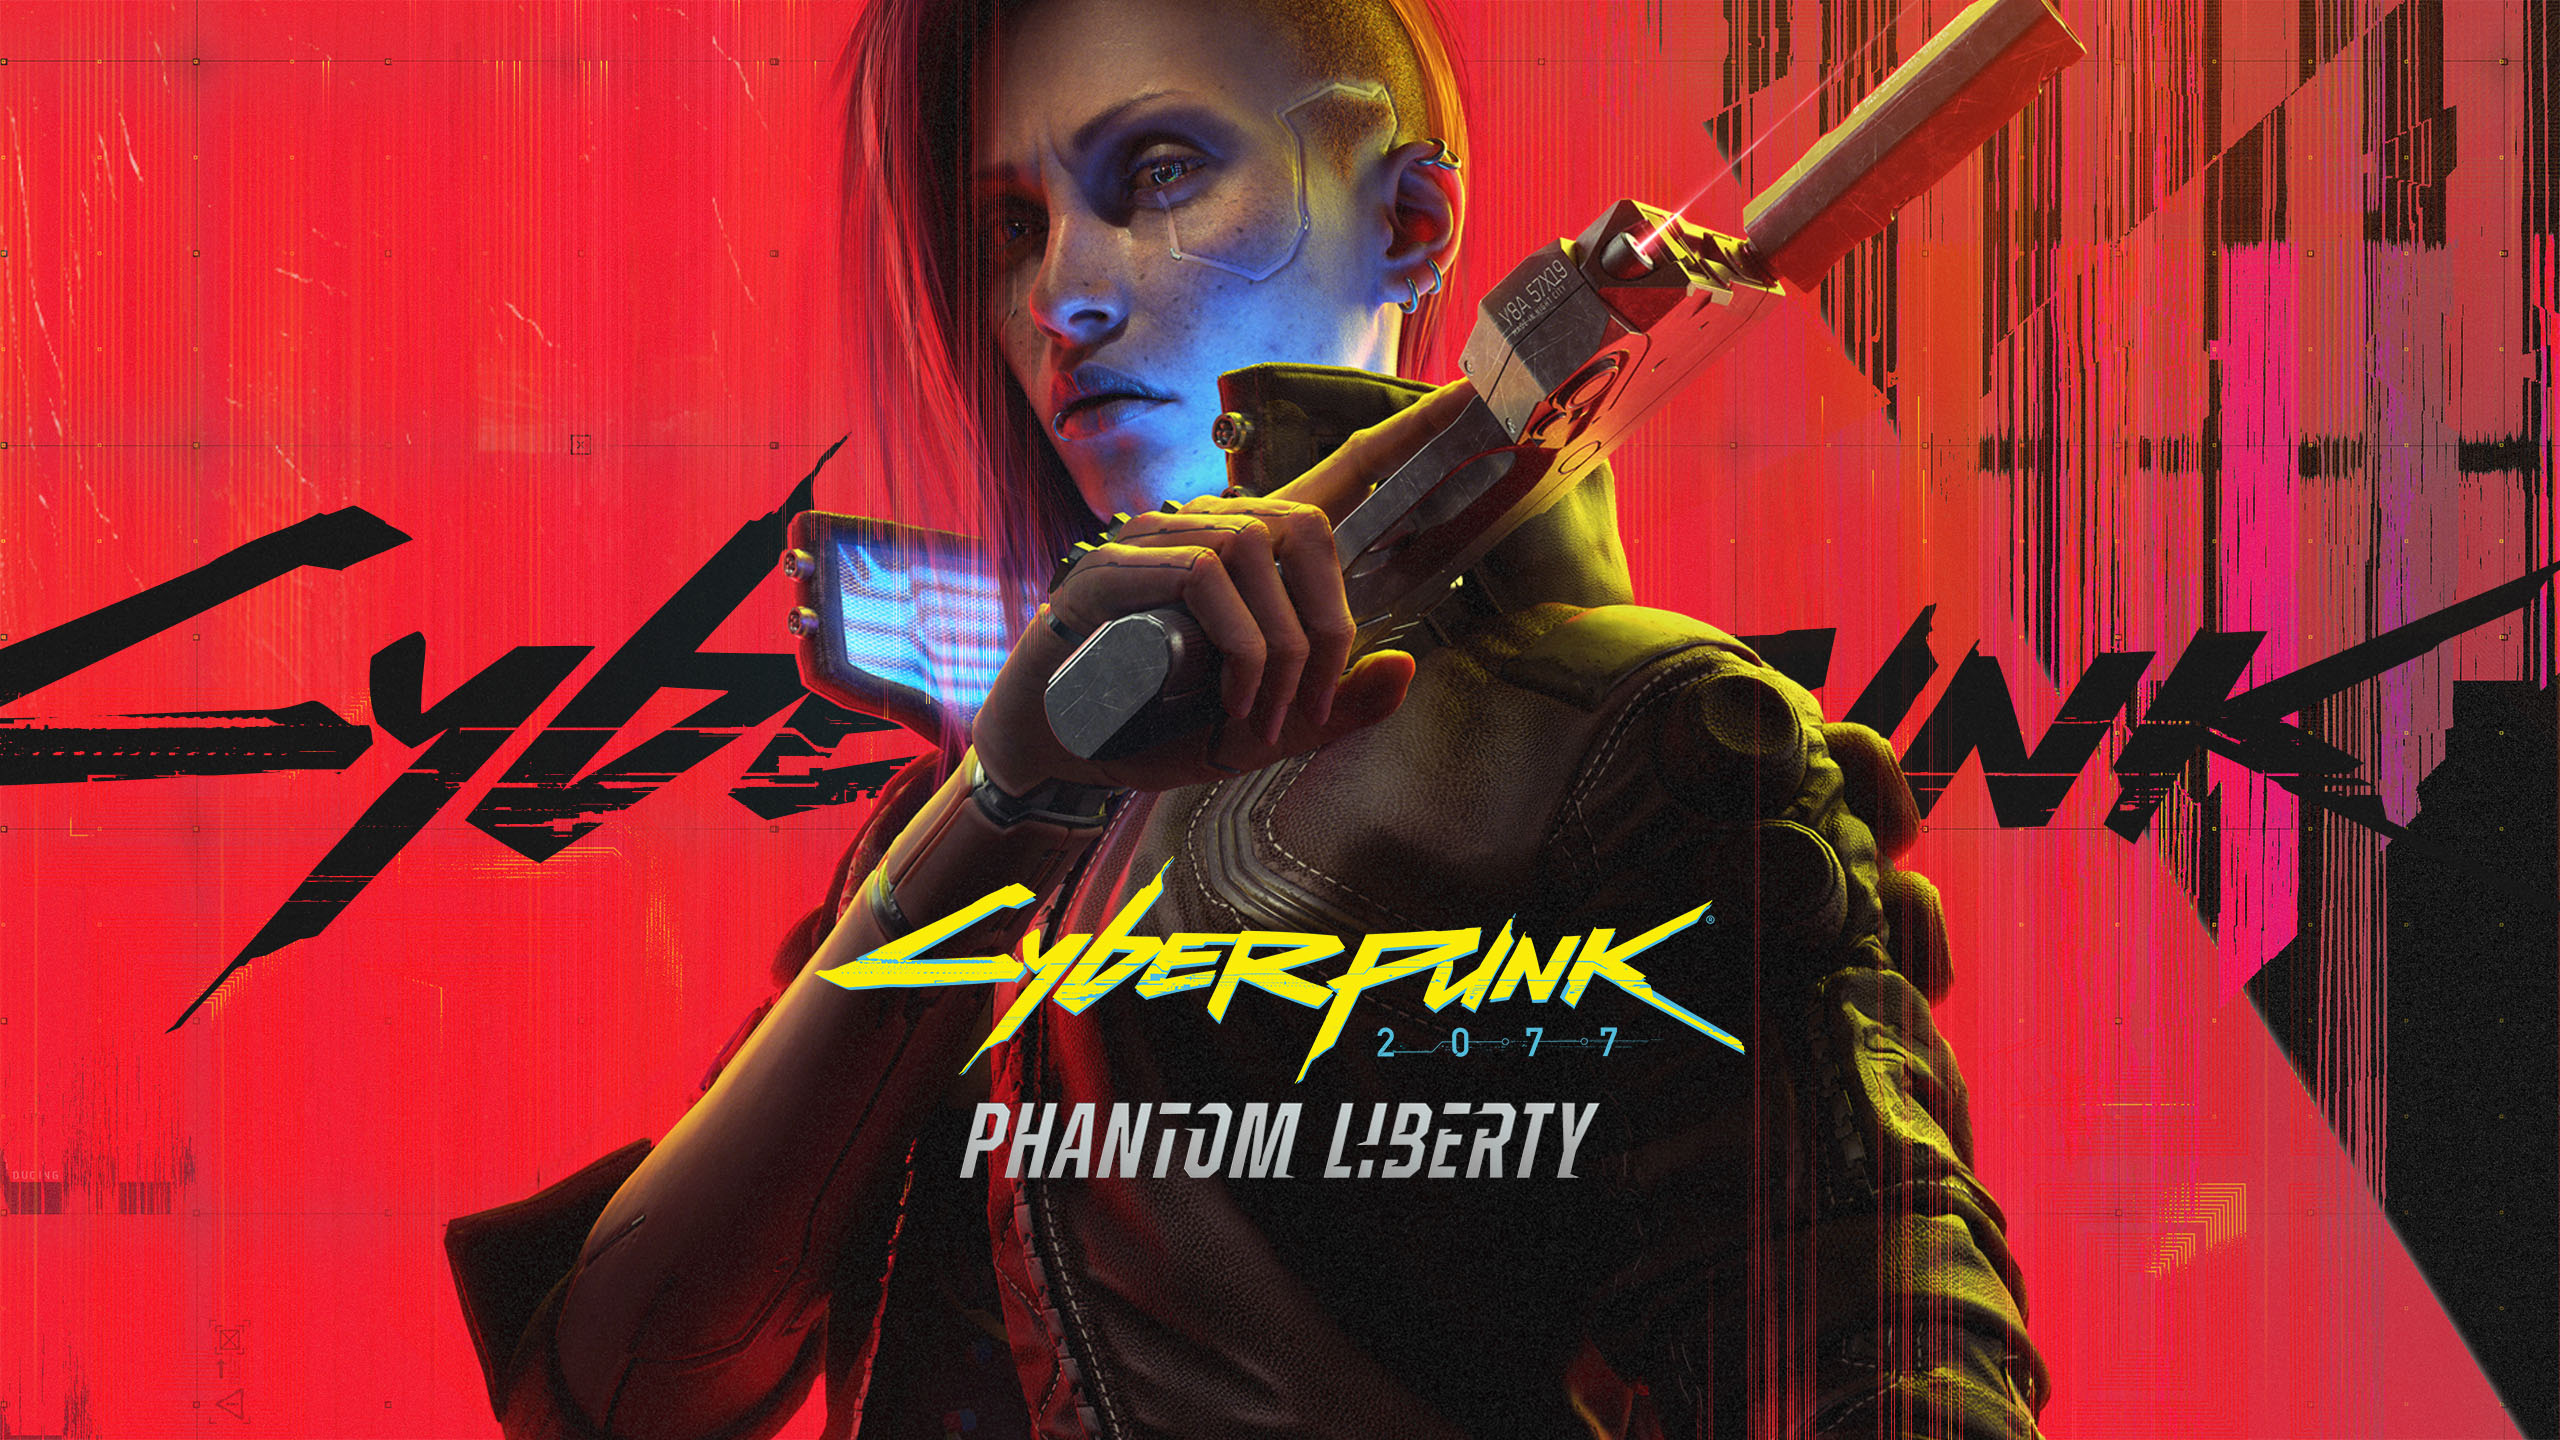 Cyberpunk 2077 Phantom liberty (xbox)+80 games